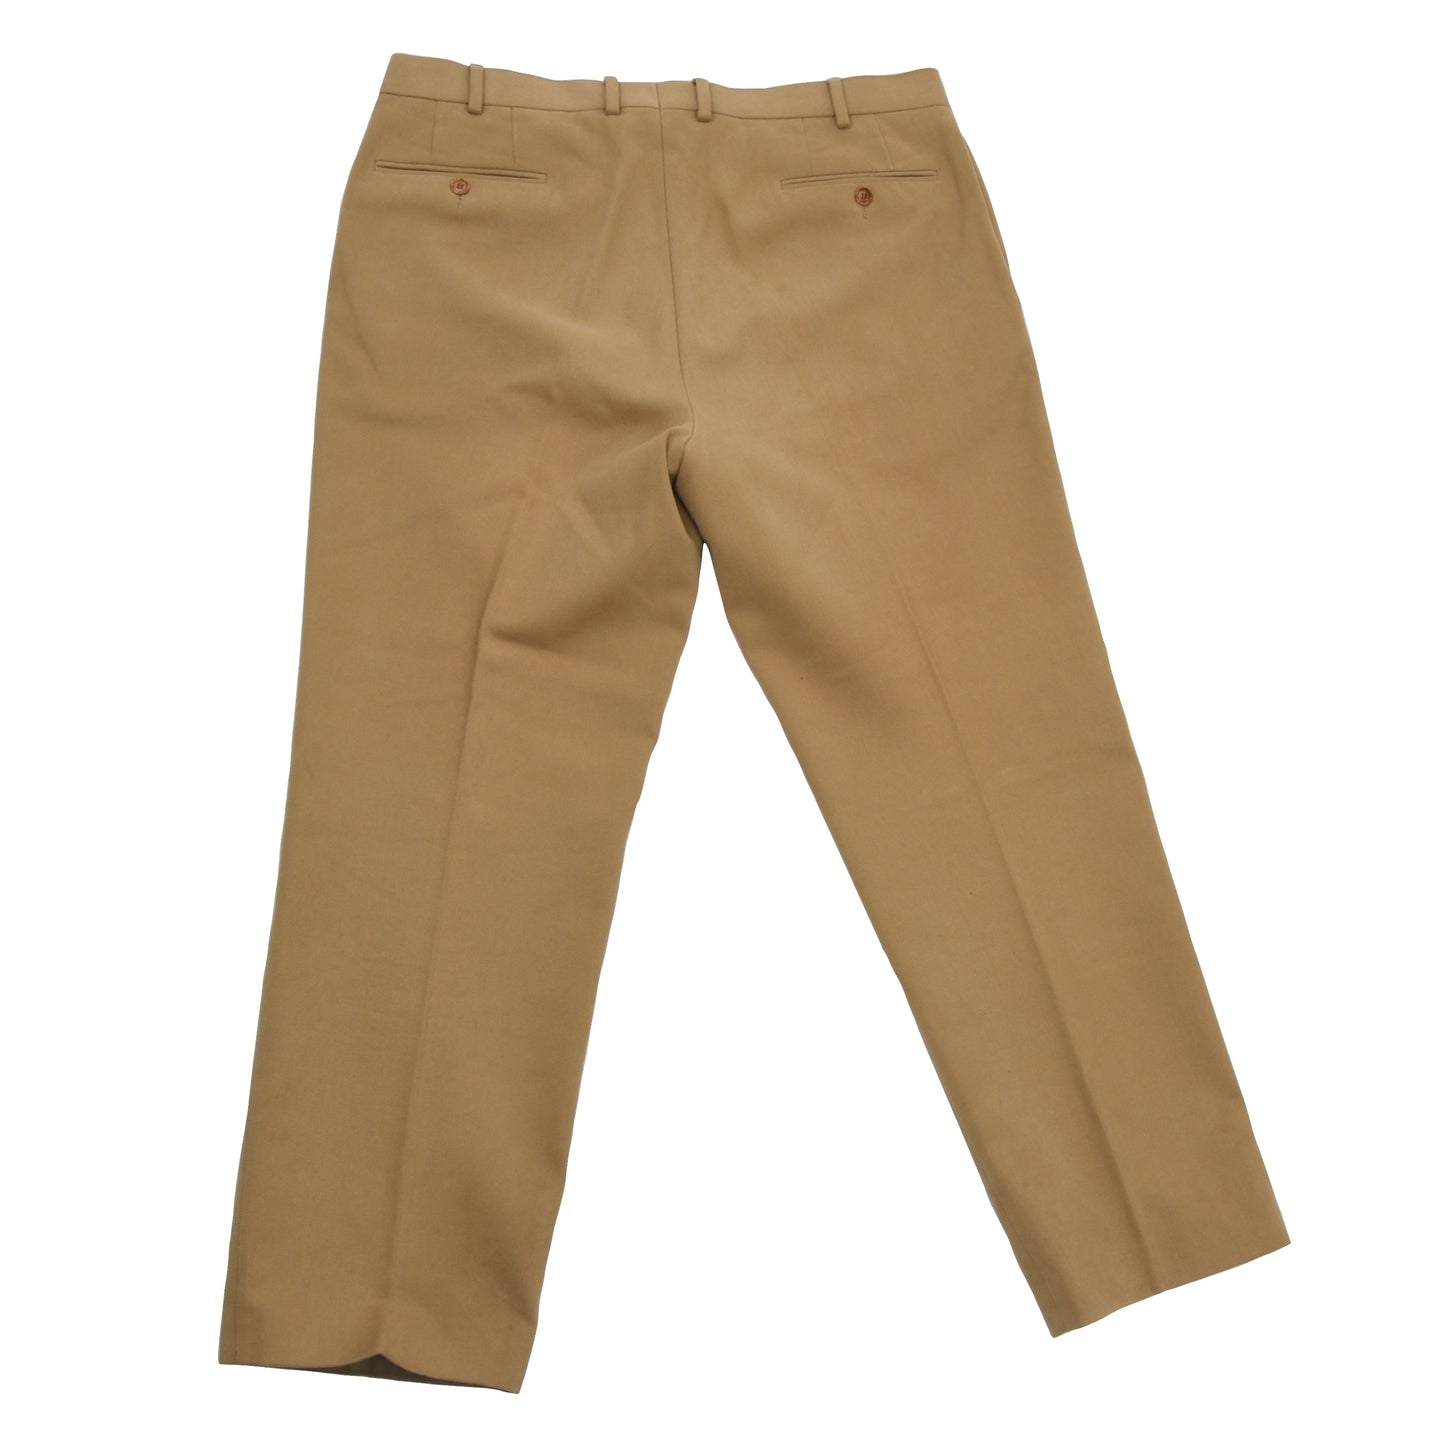 Burberry London Moleskin Pants Size 54 - Tan